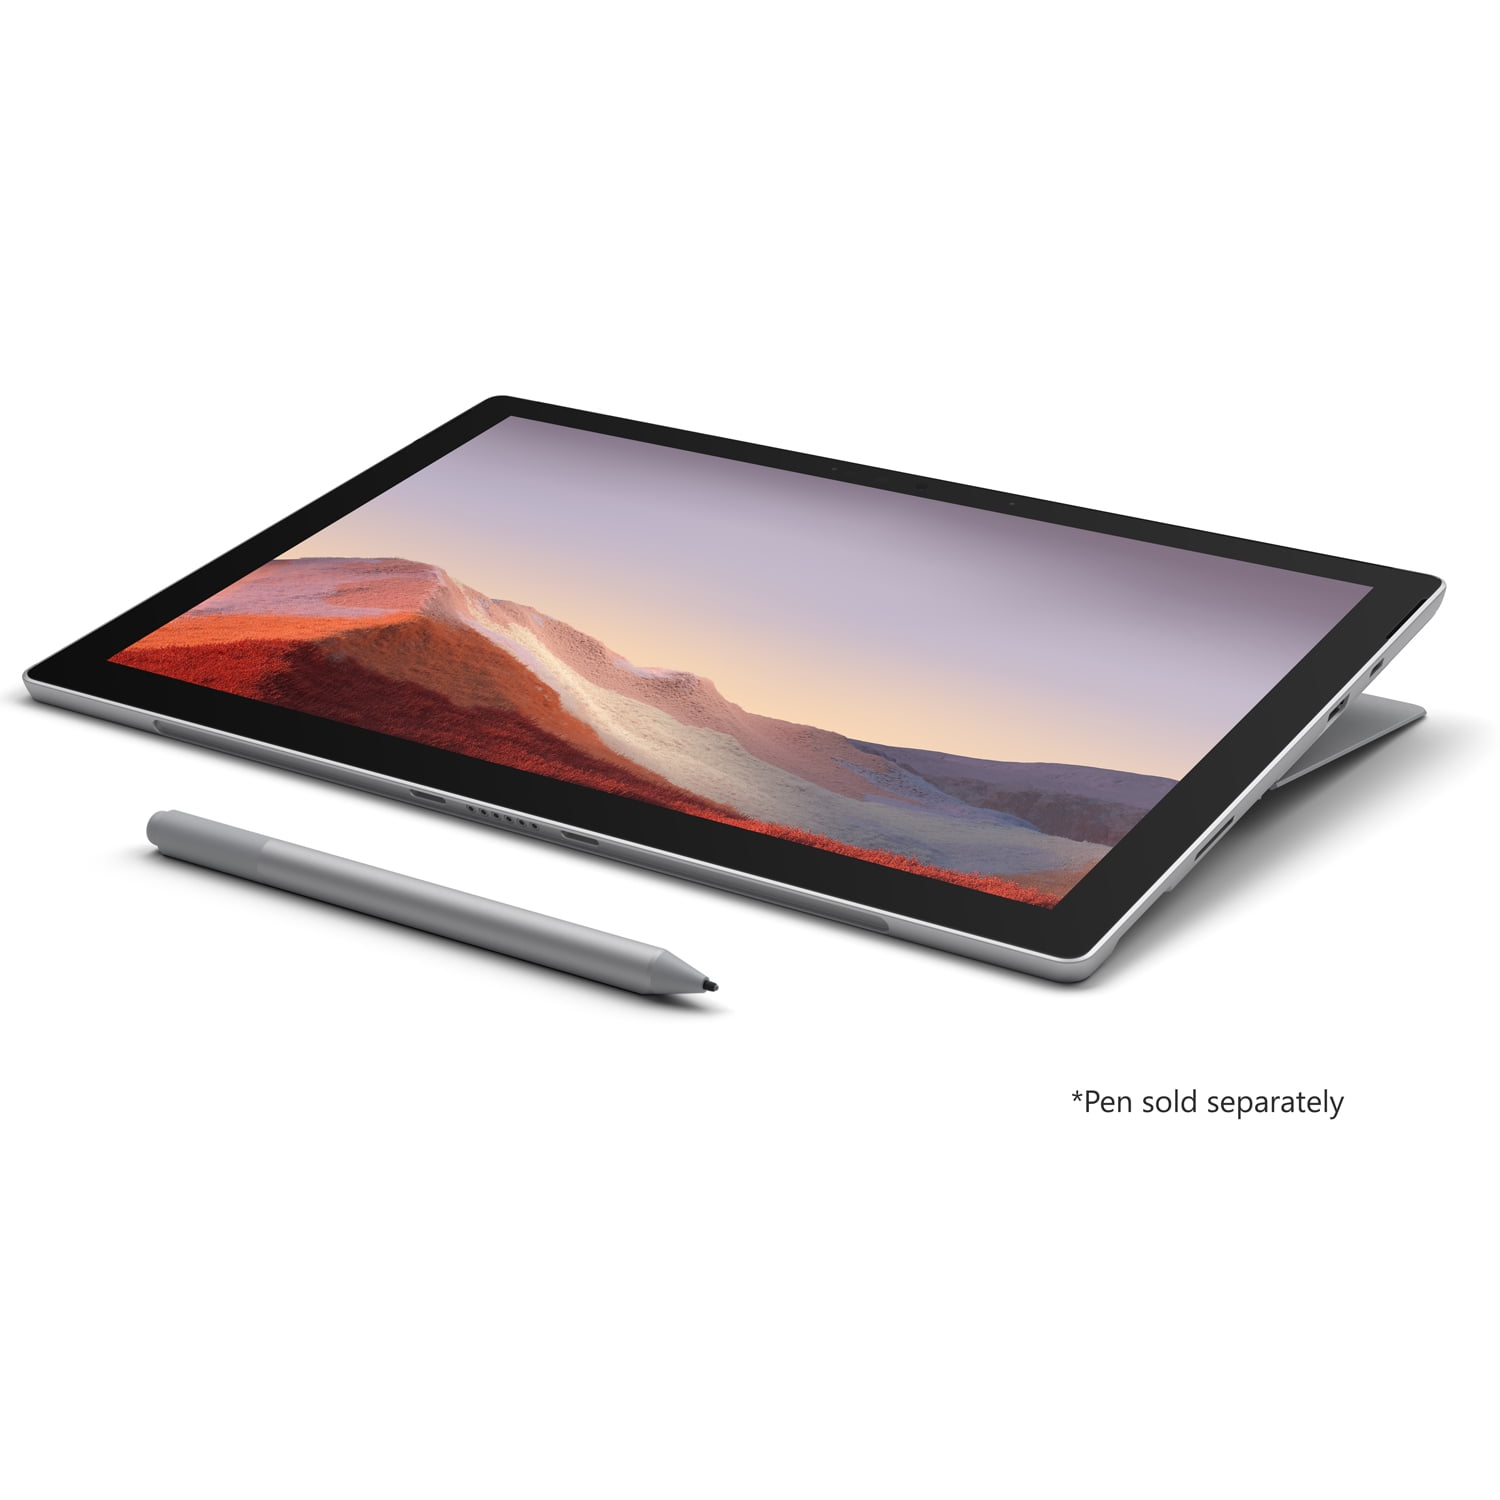 Microsoft Surface Pro 7 Quad-Core i5-1035G4 256GB/8GB RAM Wi-Fi